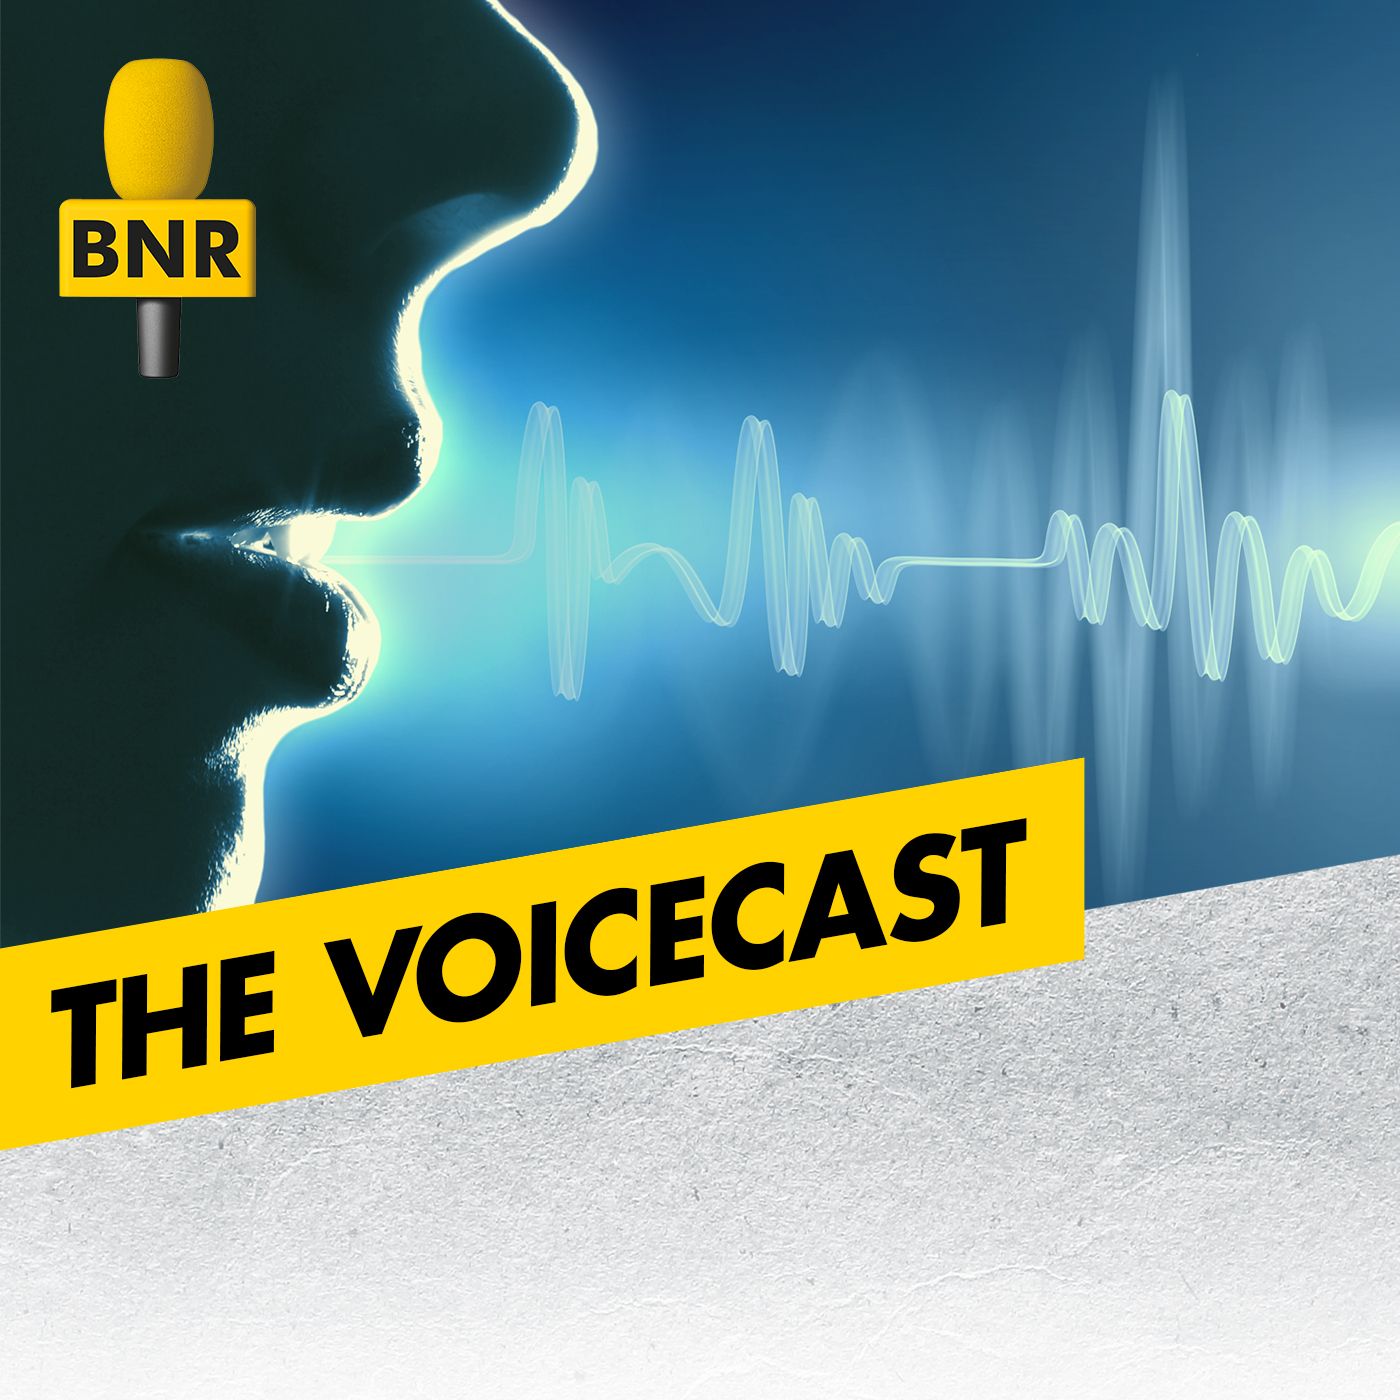 The Voicecast